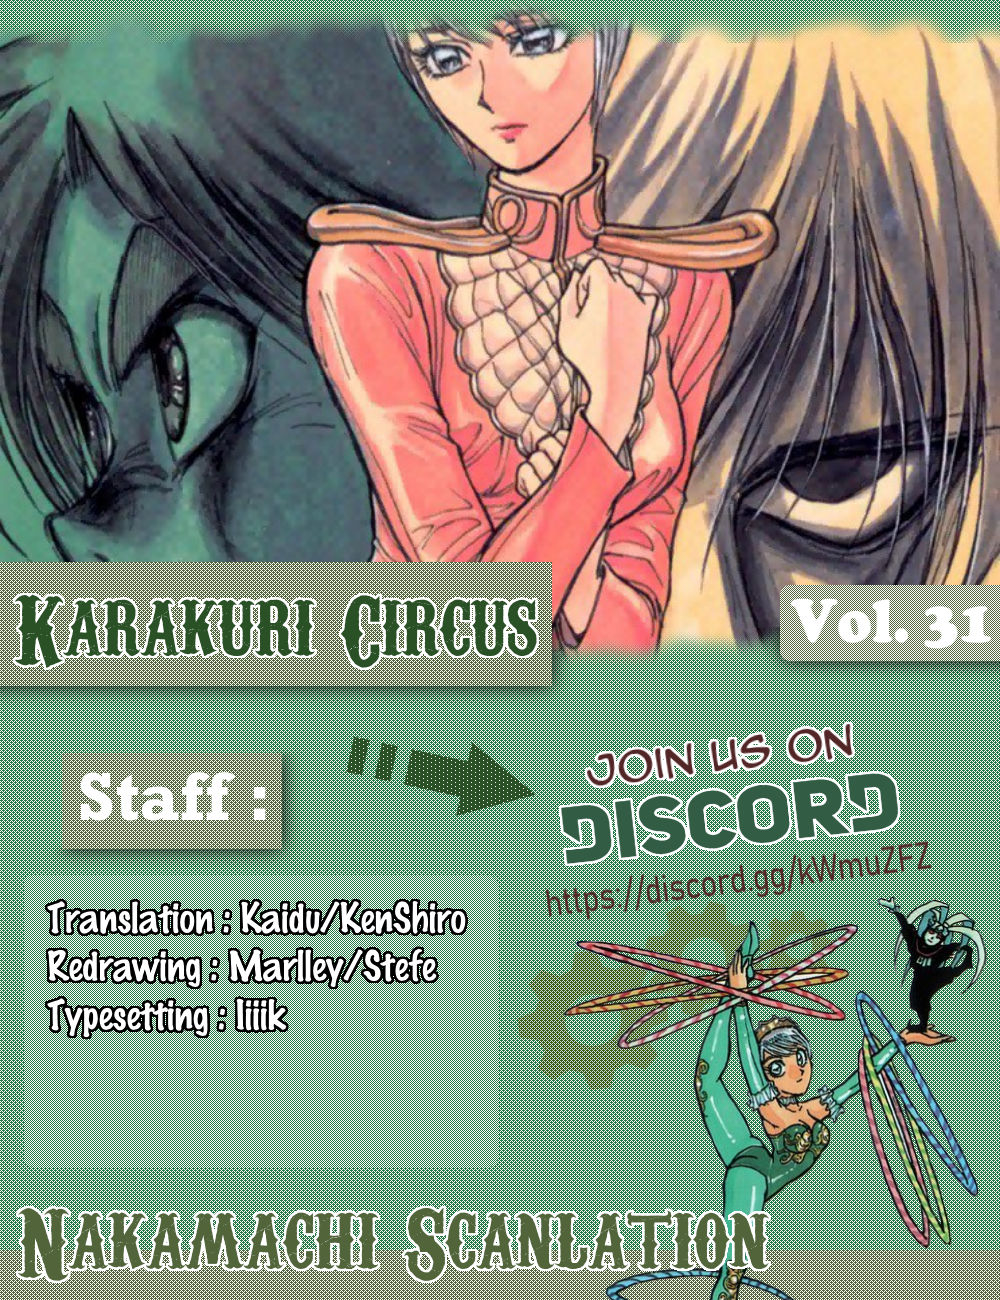 Karakuri Circus Chapter 303: Main Part - Days With Narumi - Act 3: Scream - Picture 1